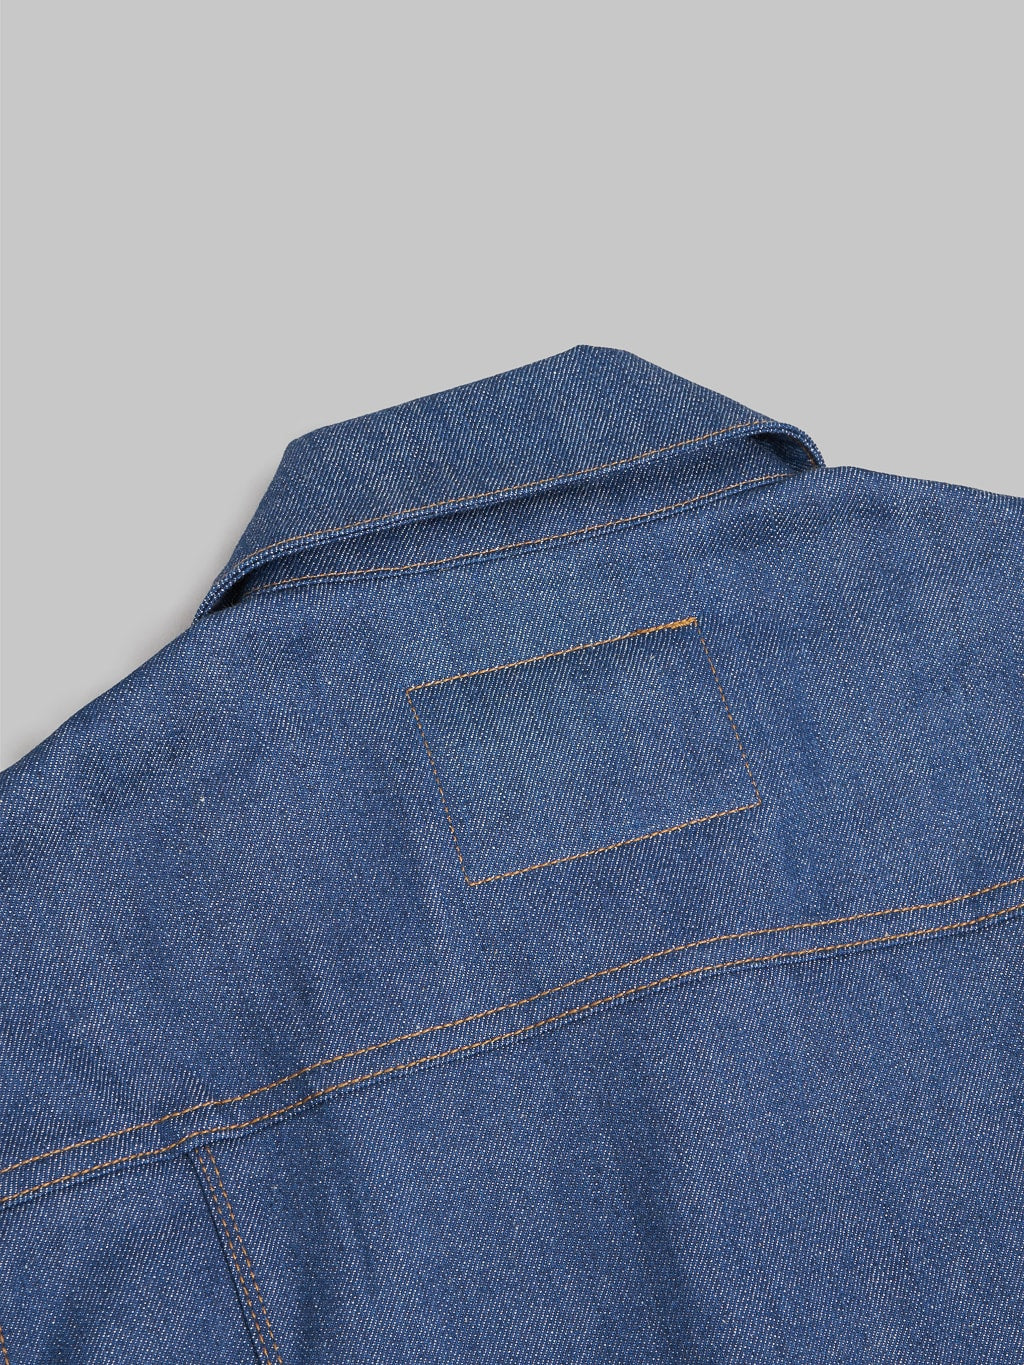 freenote cloth classic denim jacket vintage blue denim 100 cotton